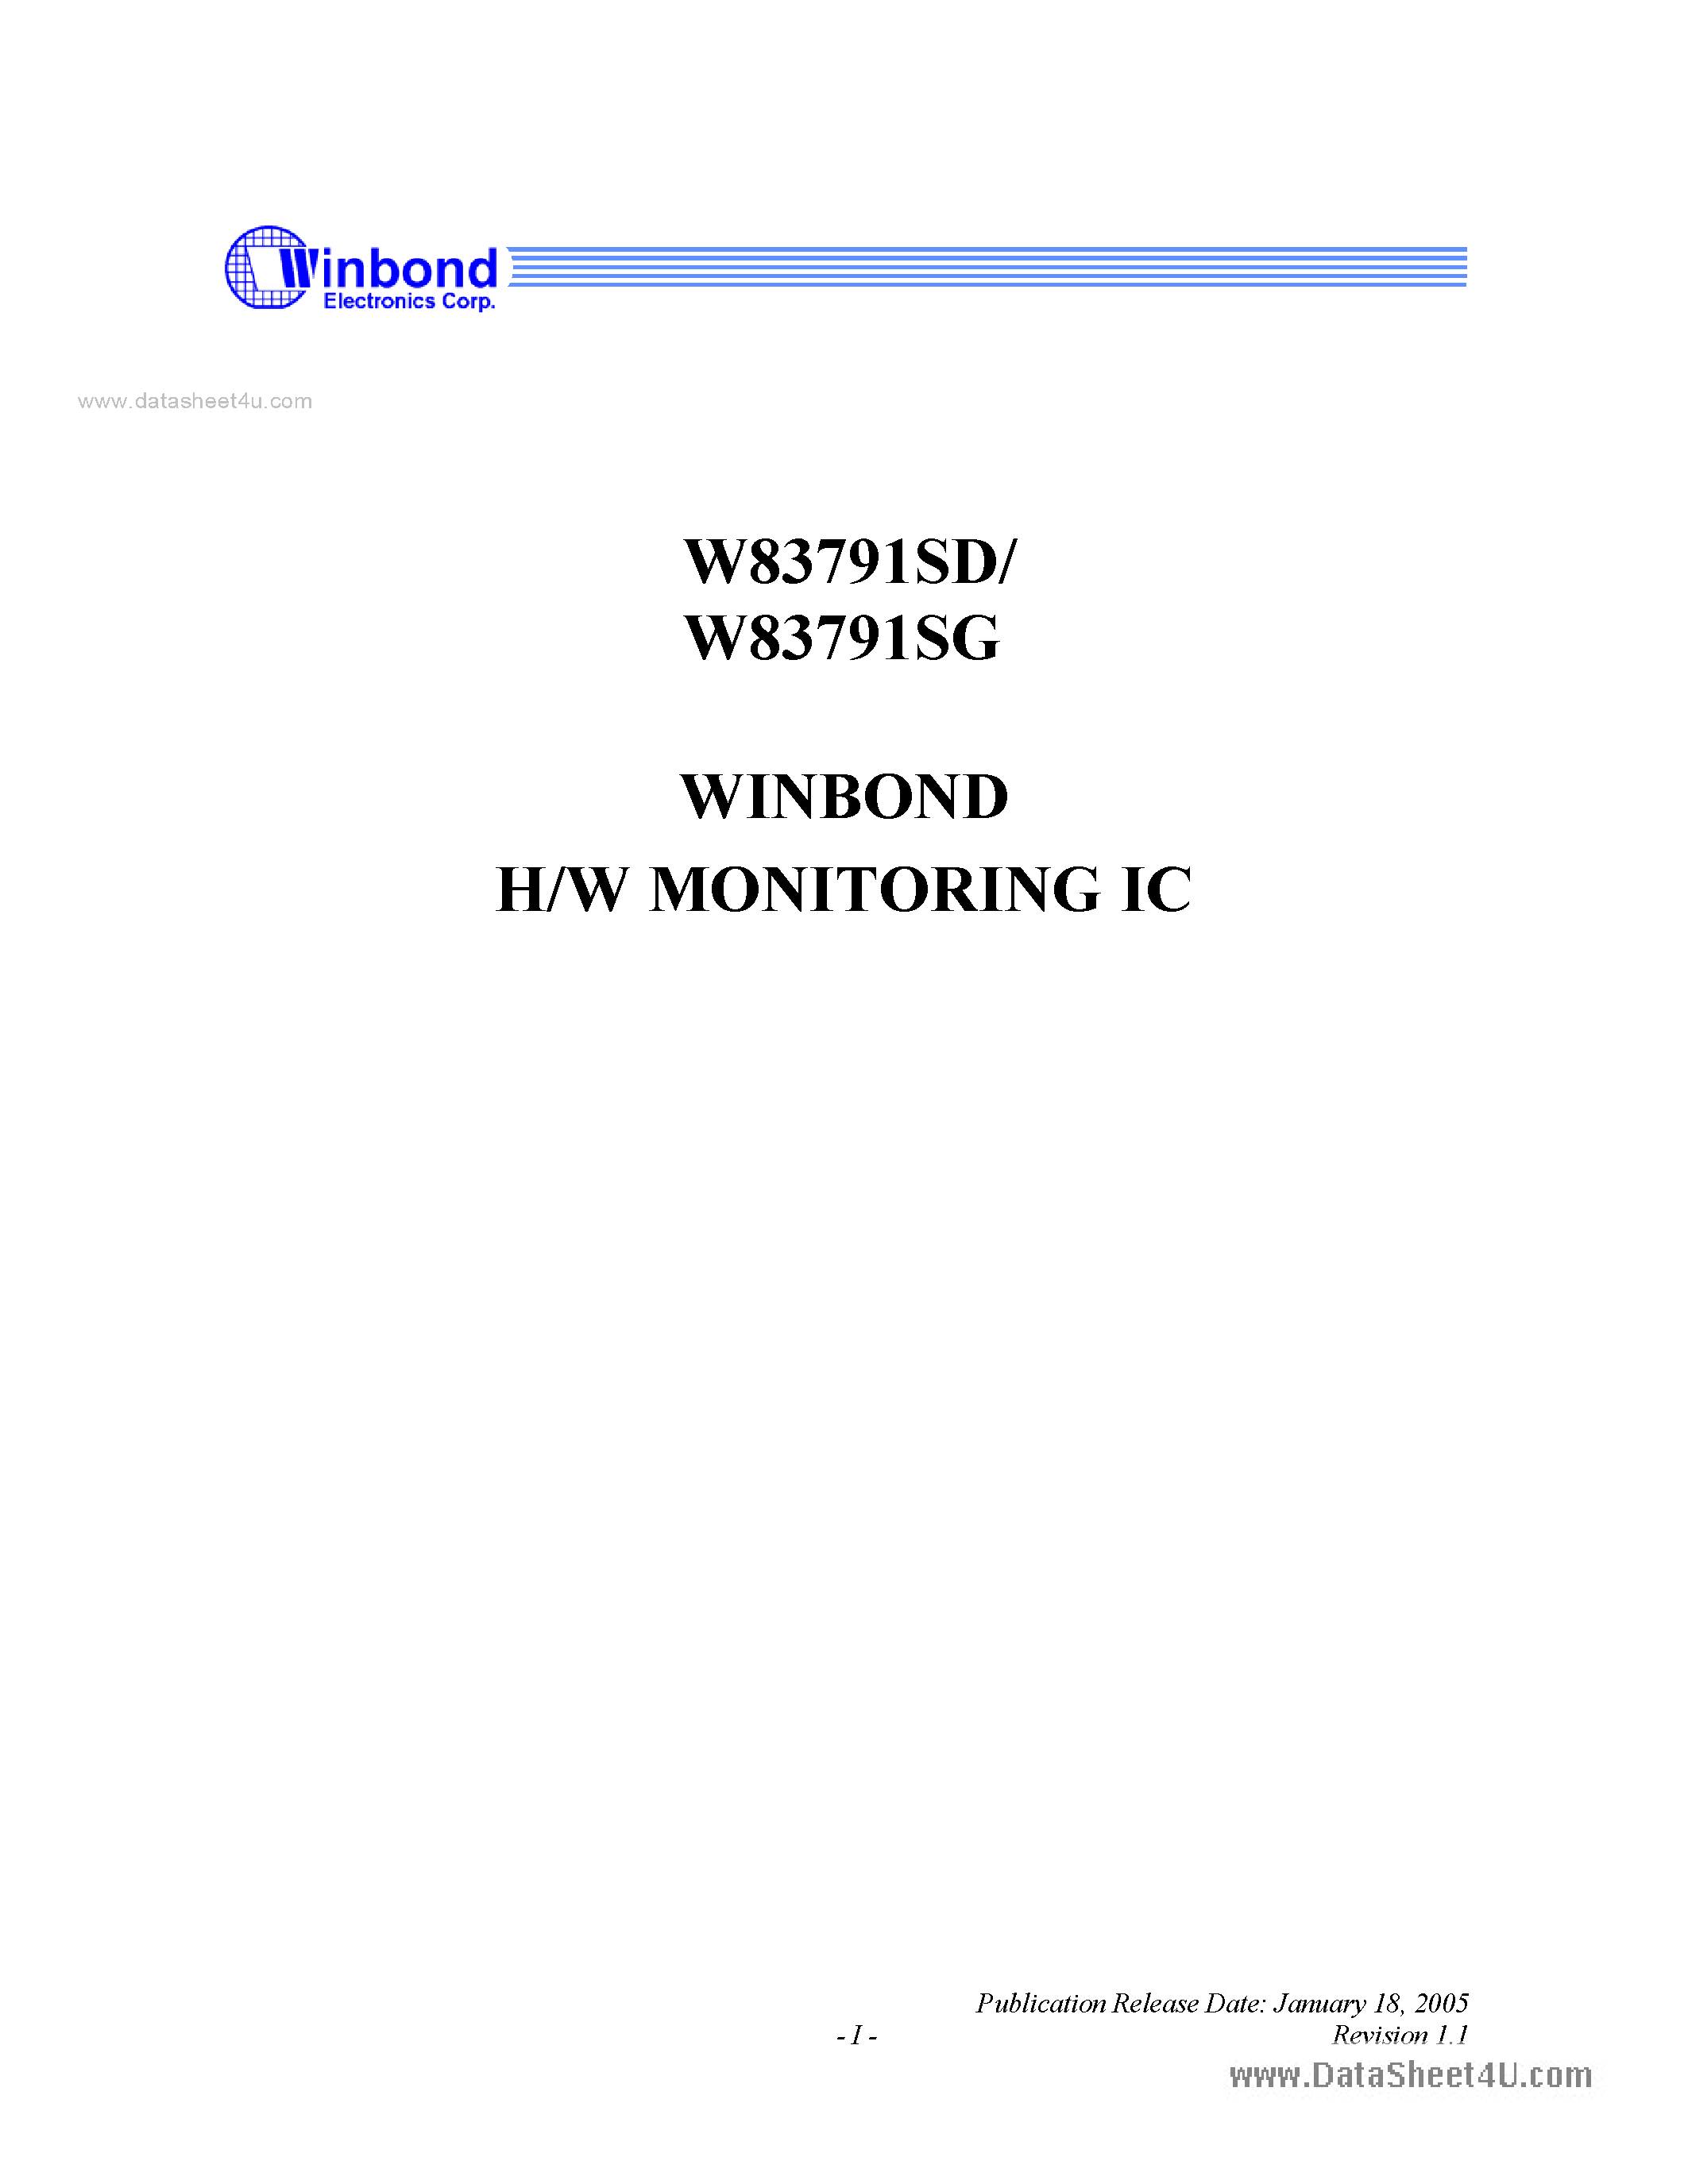 Datasheet W83791SD - H/W MONITORING IC page 1